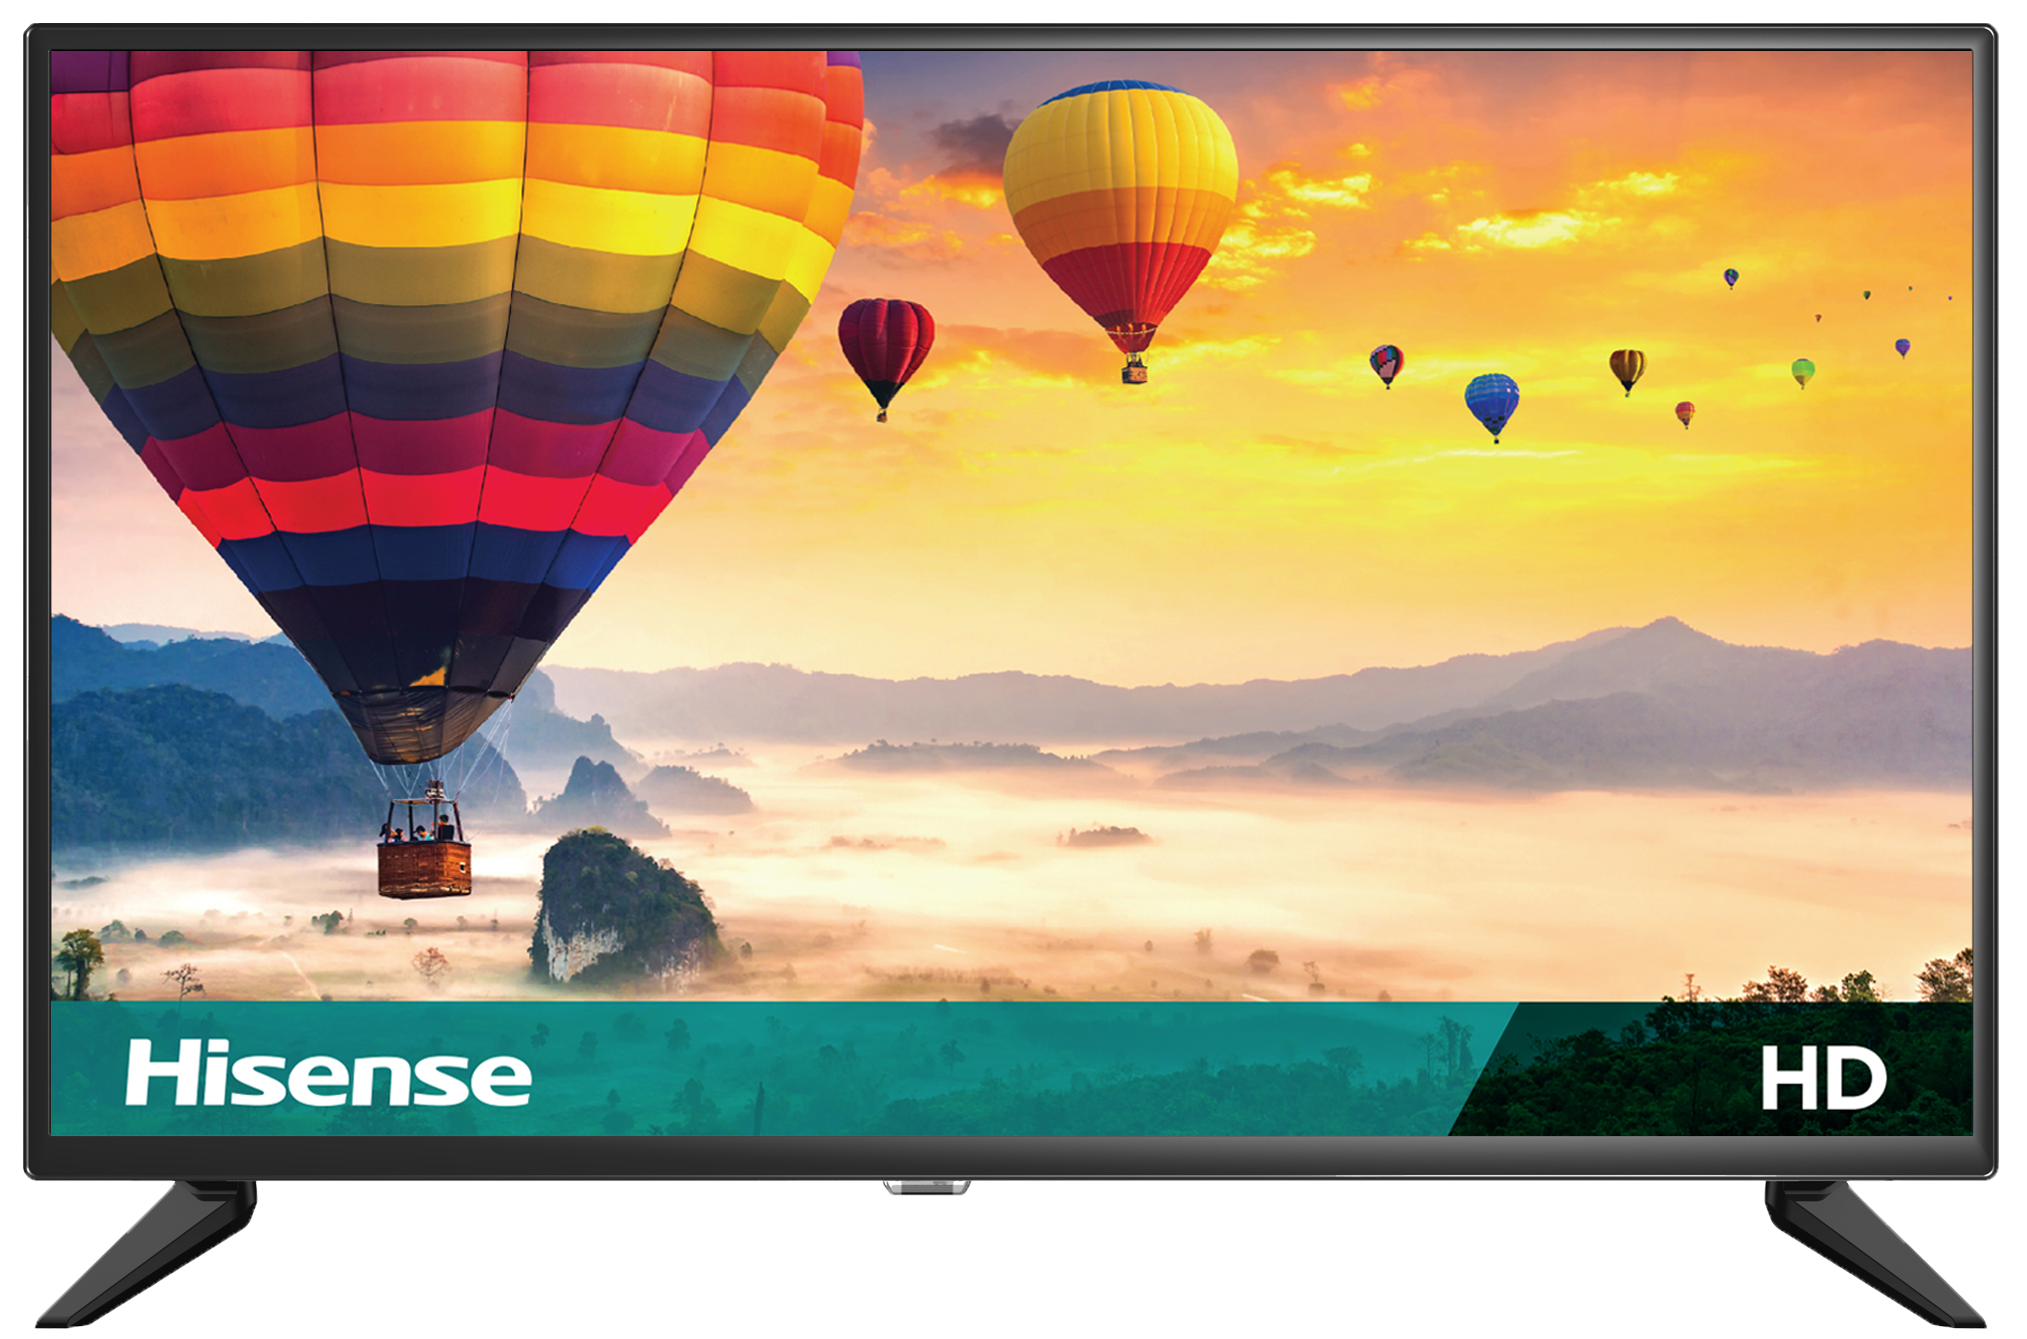 Product Support | HD Hisense Feature TV (2019) (32H3E9) - Hisense USA